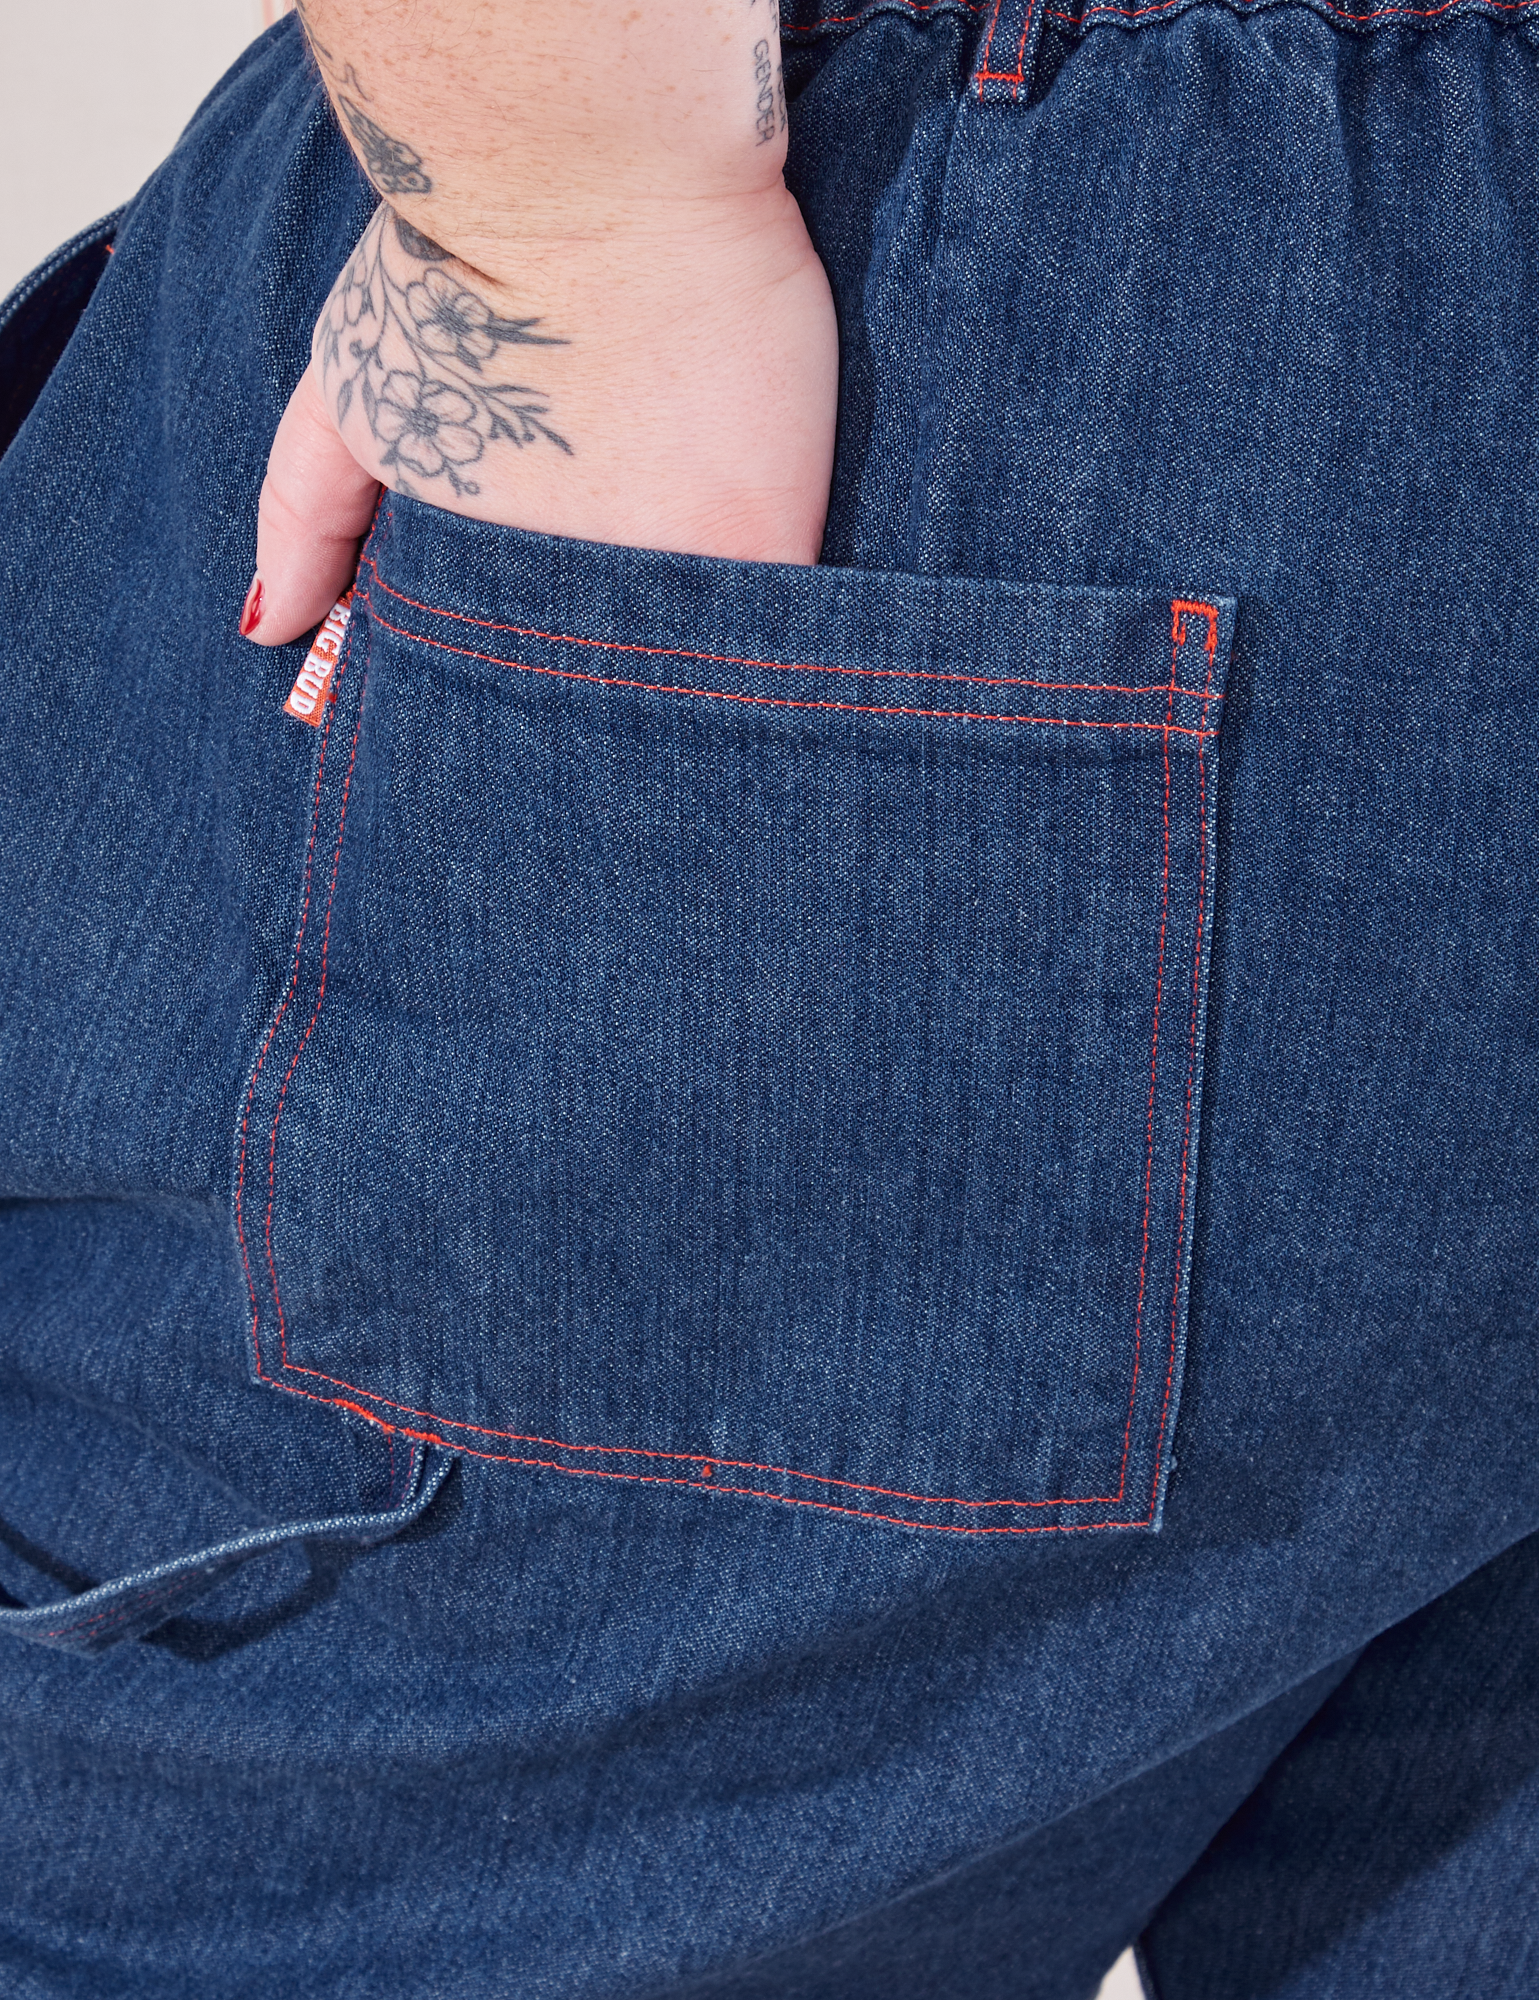 Petite Carpenter Jeans in Dark Wash back pocket close up. Jordan has their hand in the pocket.